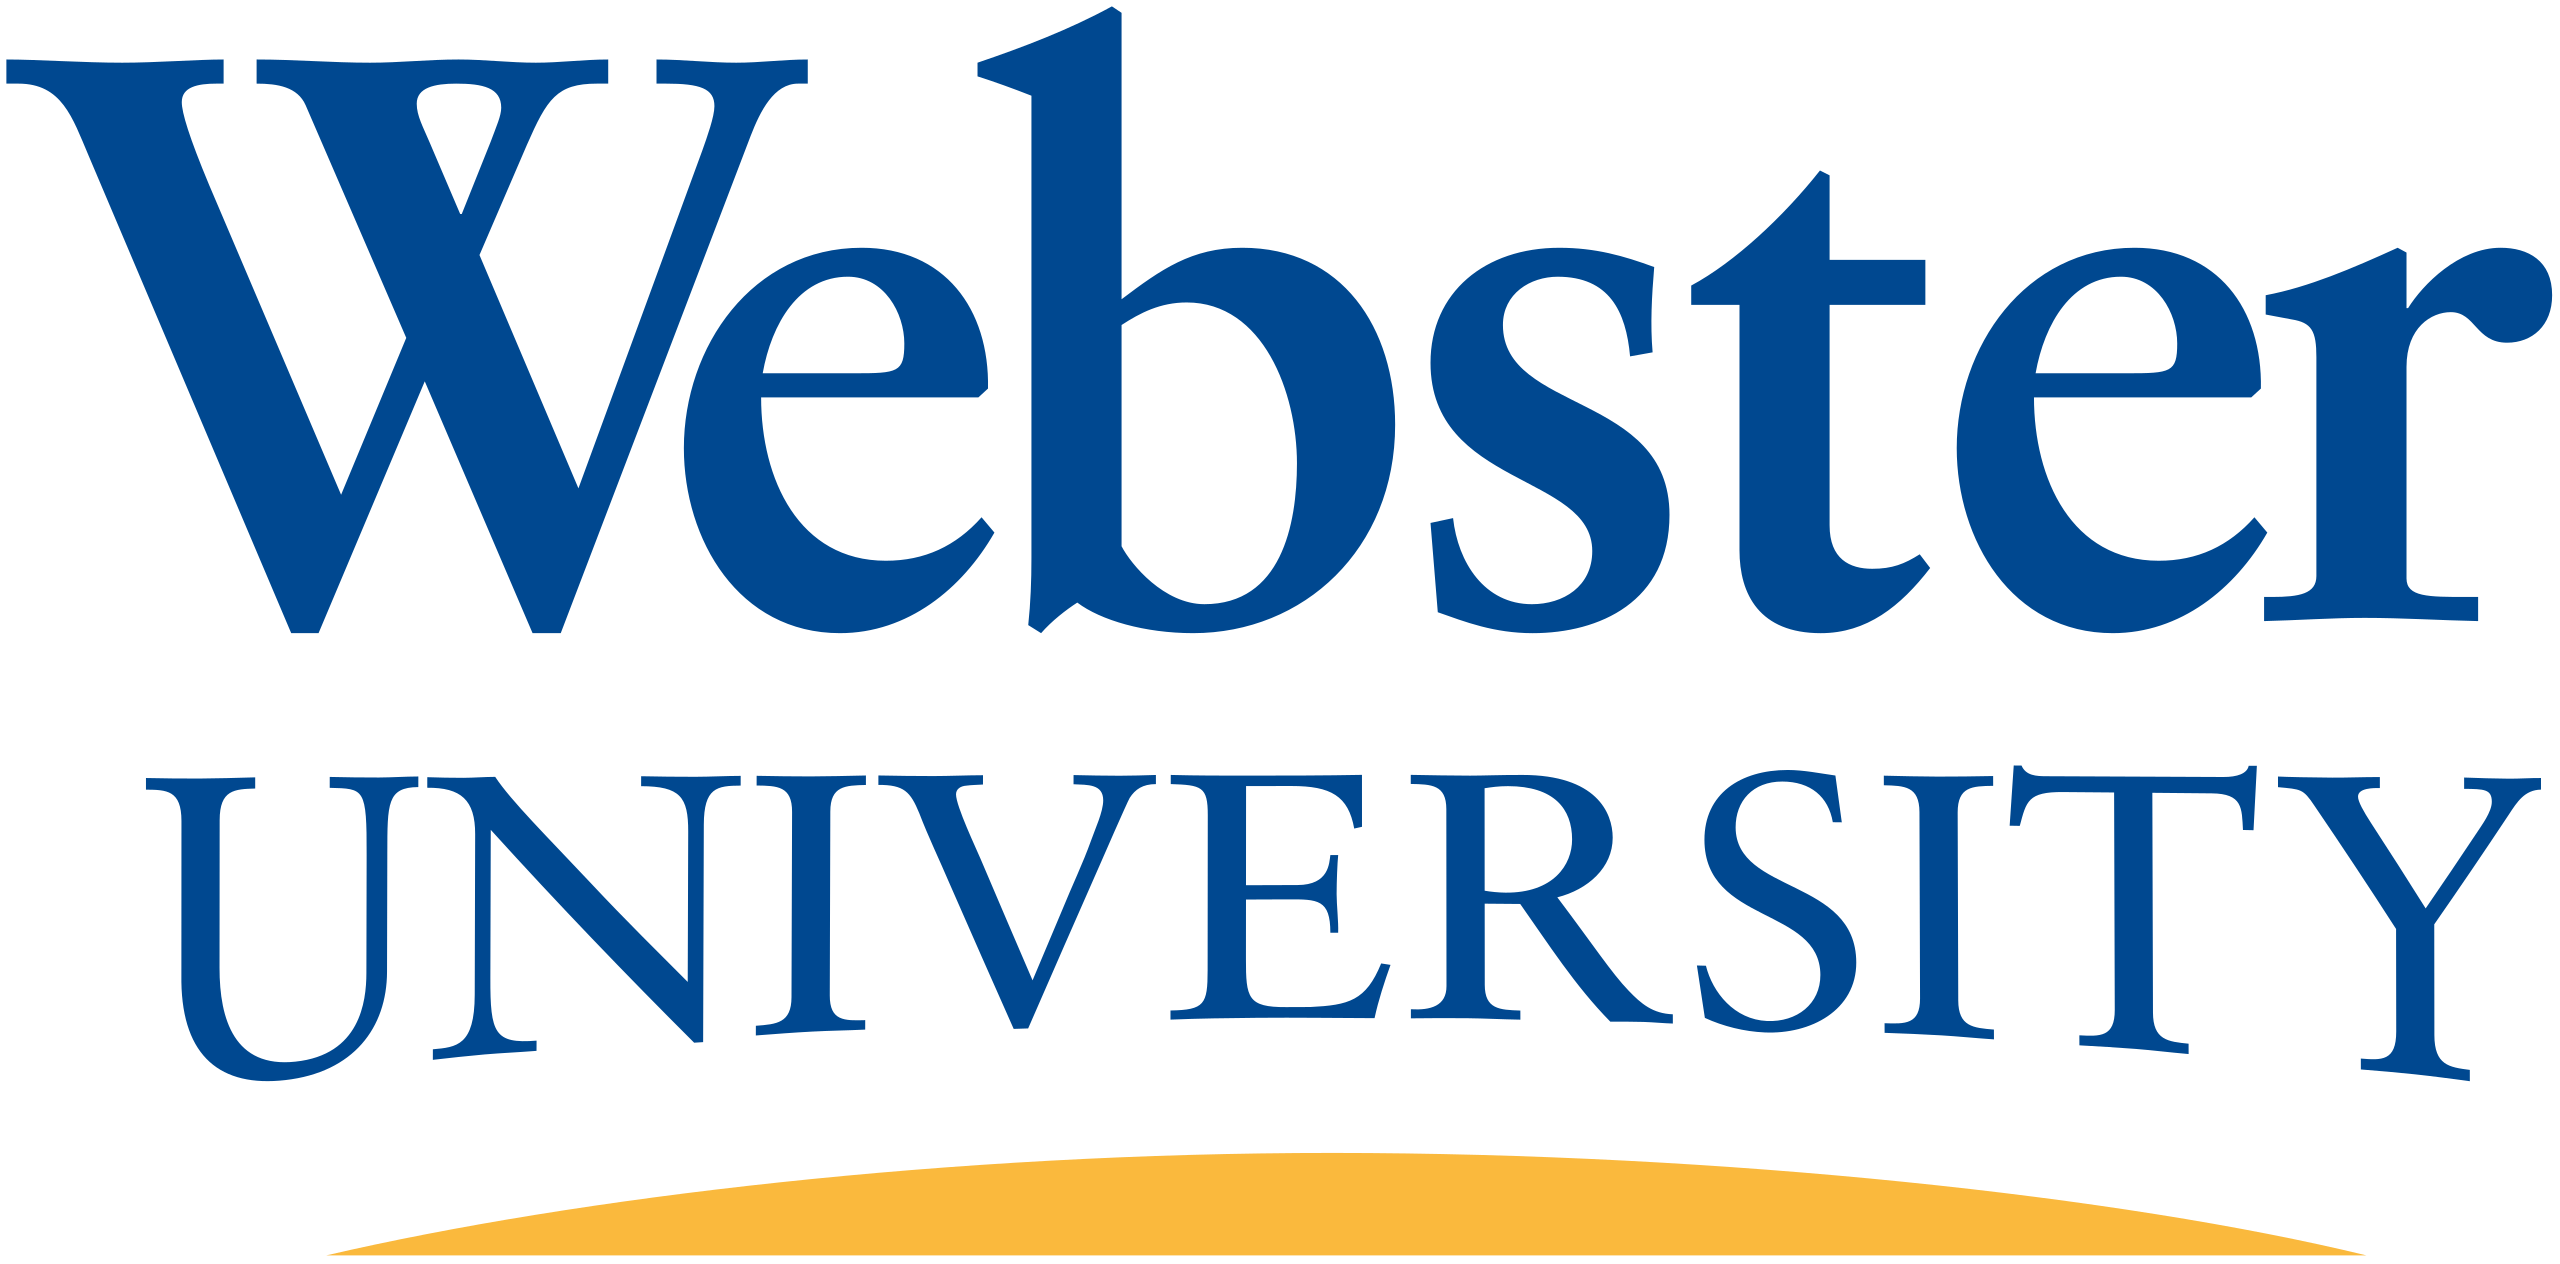 Universidad de Webster